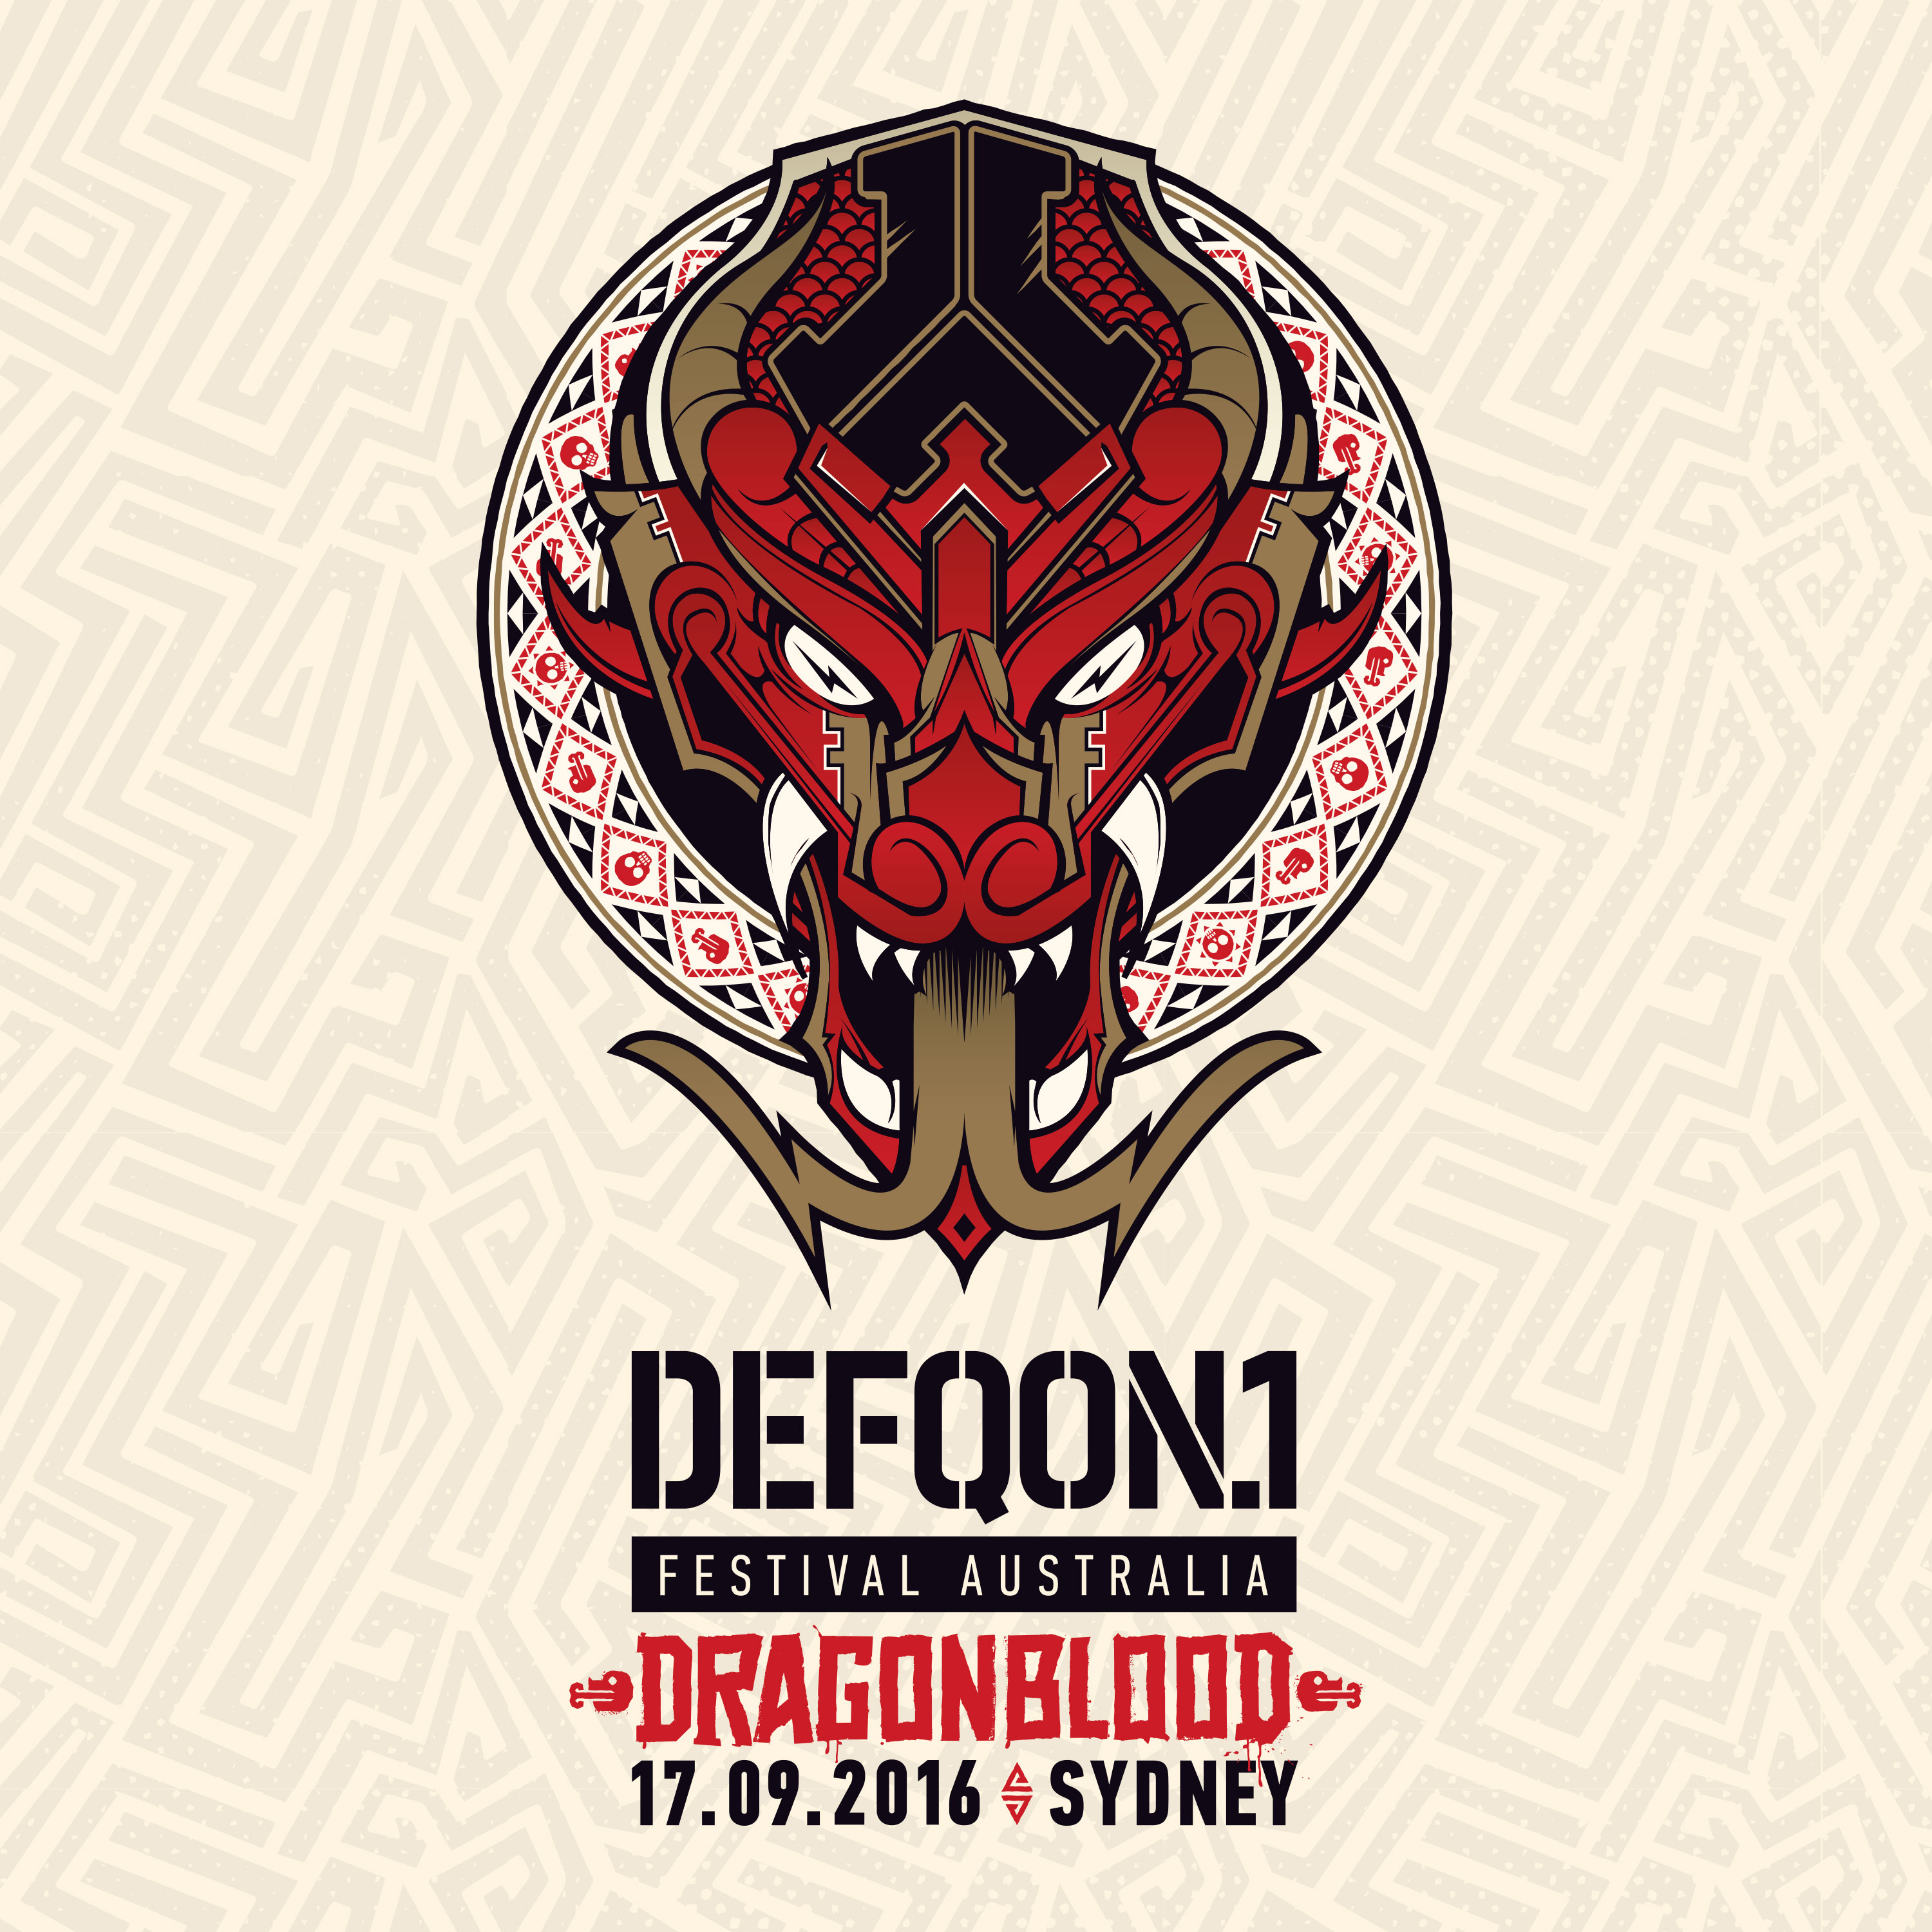 Defqon.1 Festival Australia 2016: Dragonblood